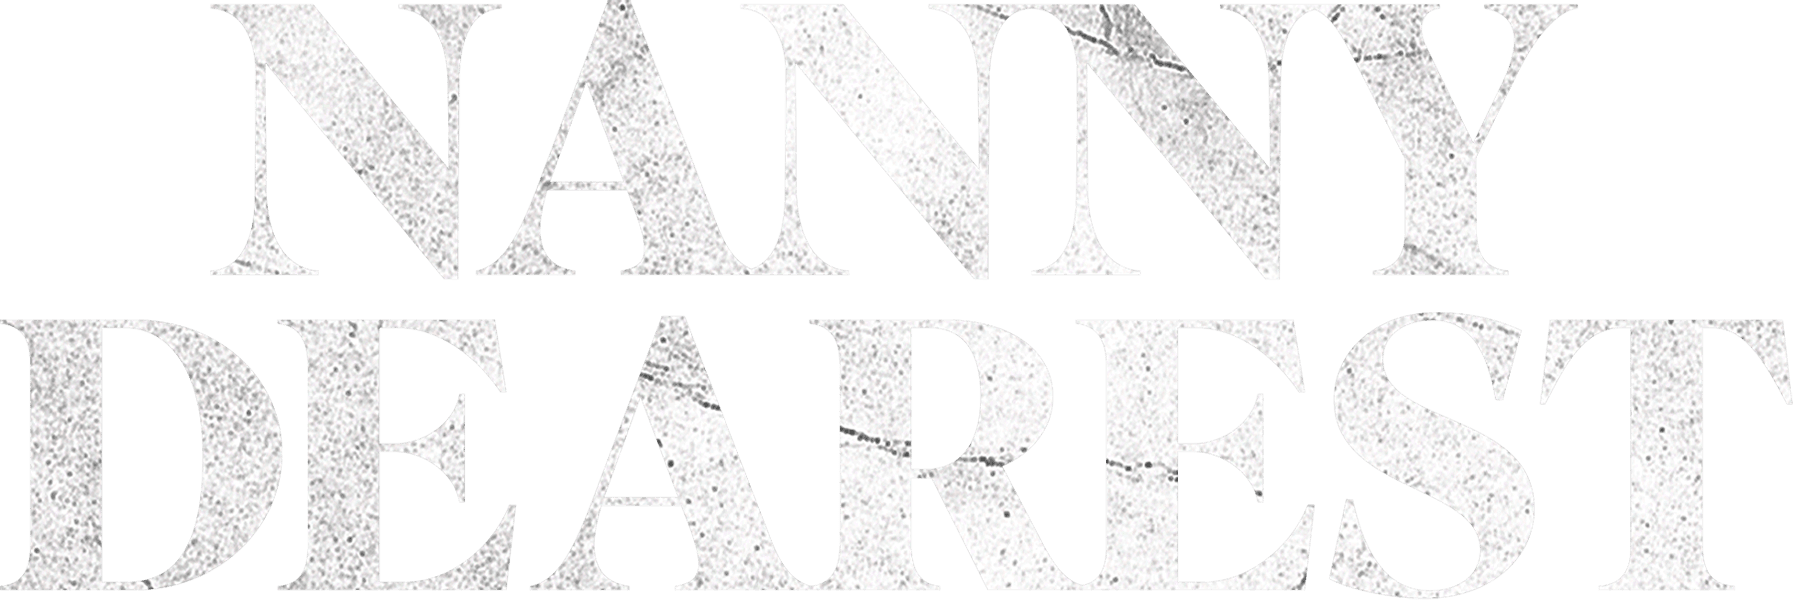 Nanny Dearest logo